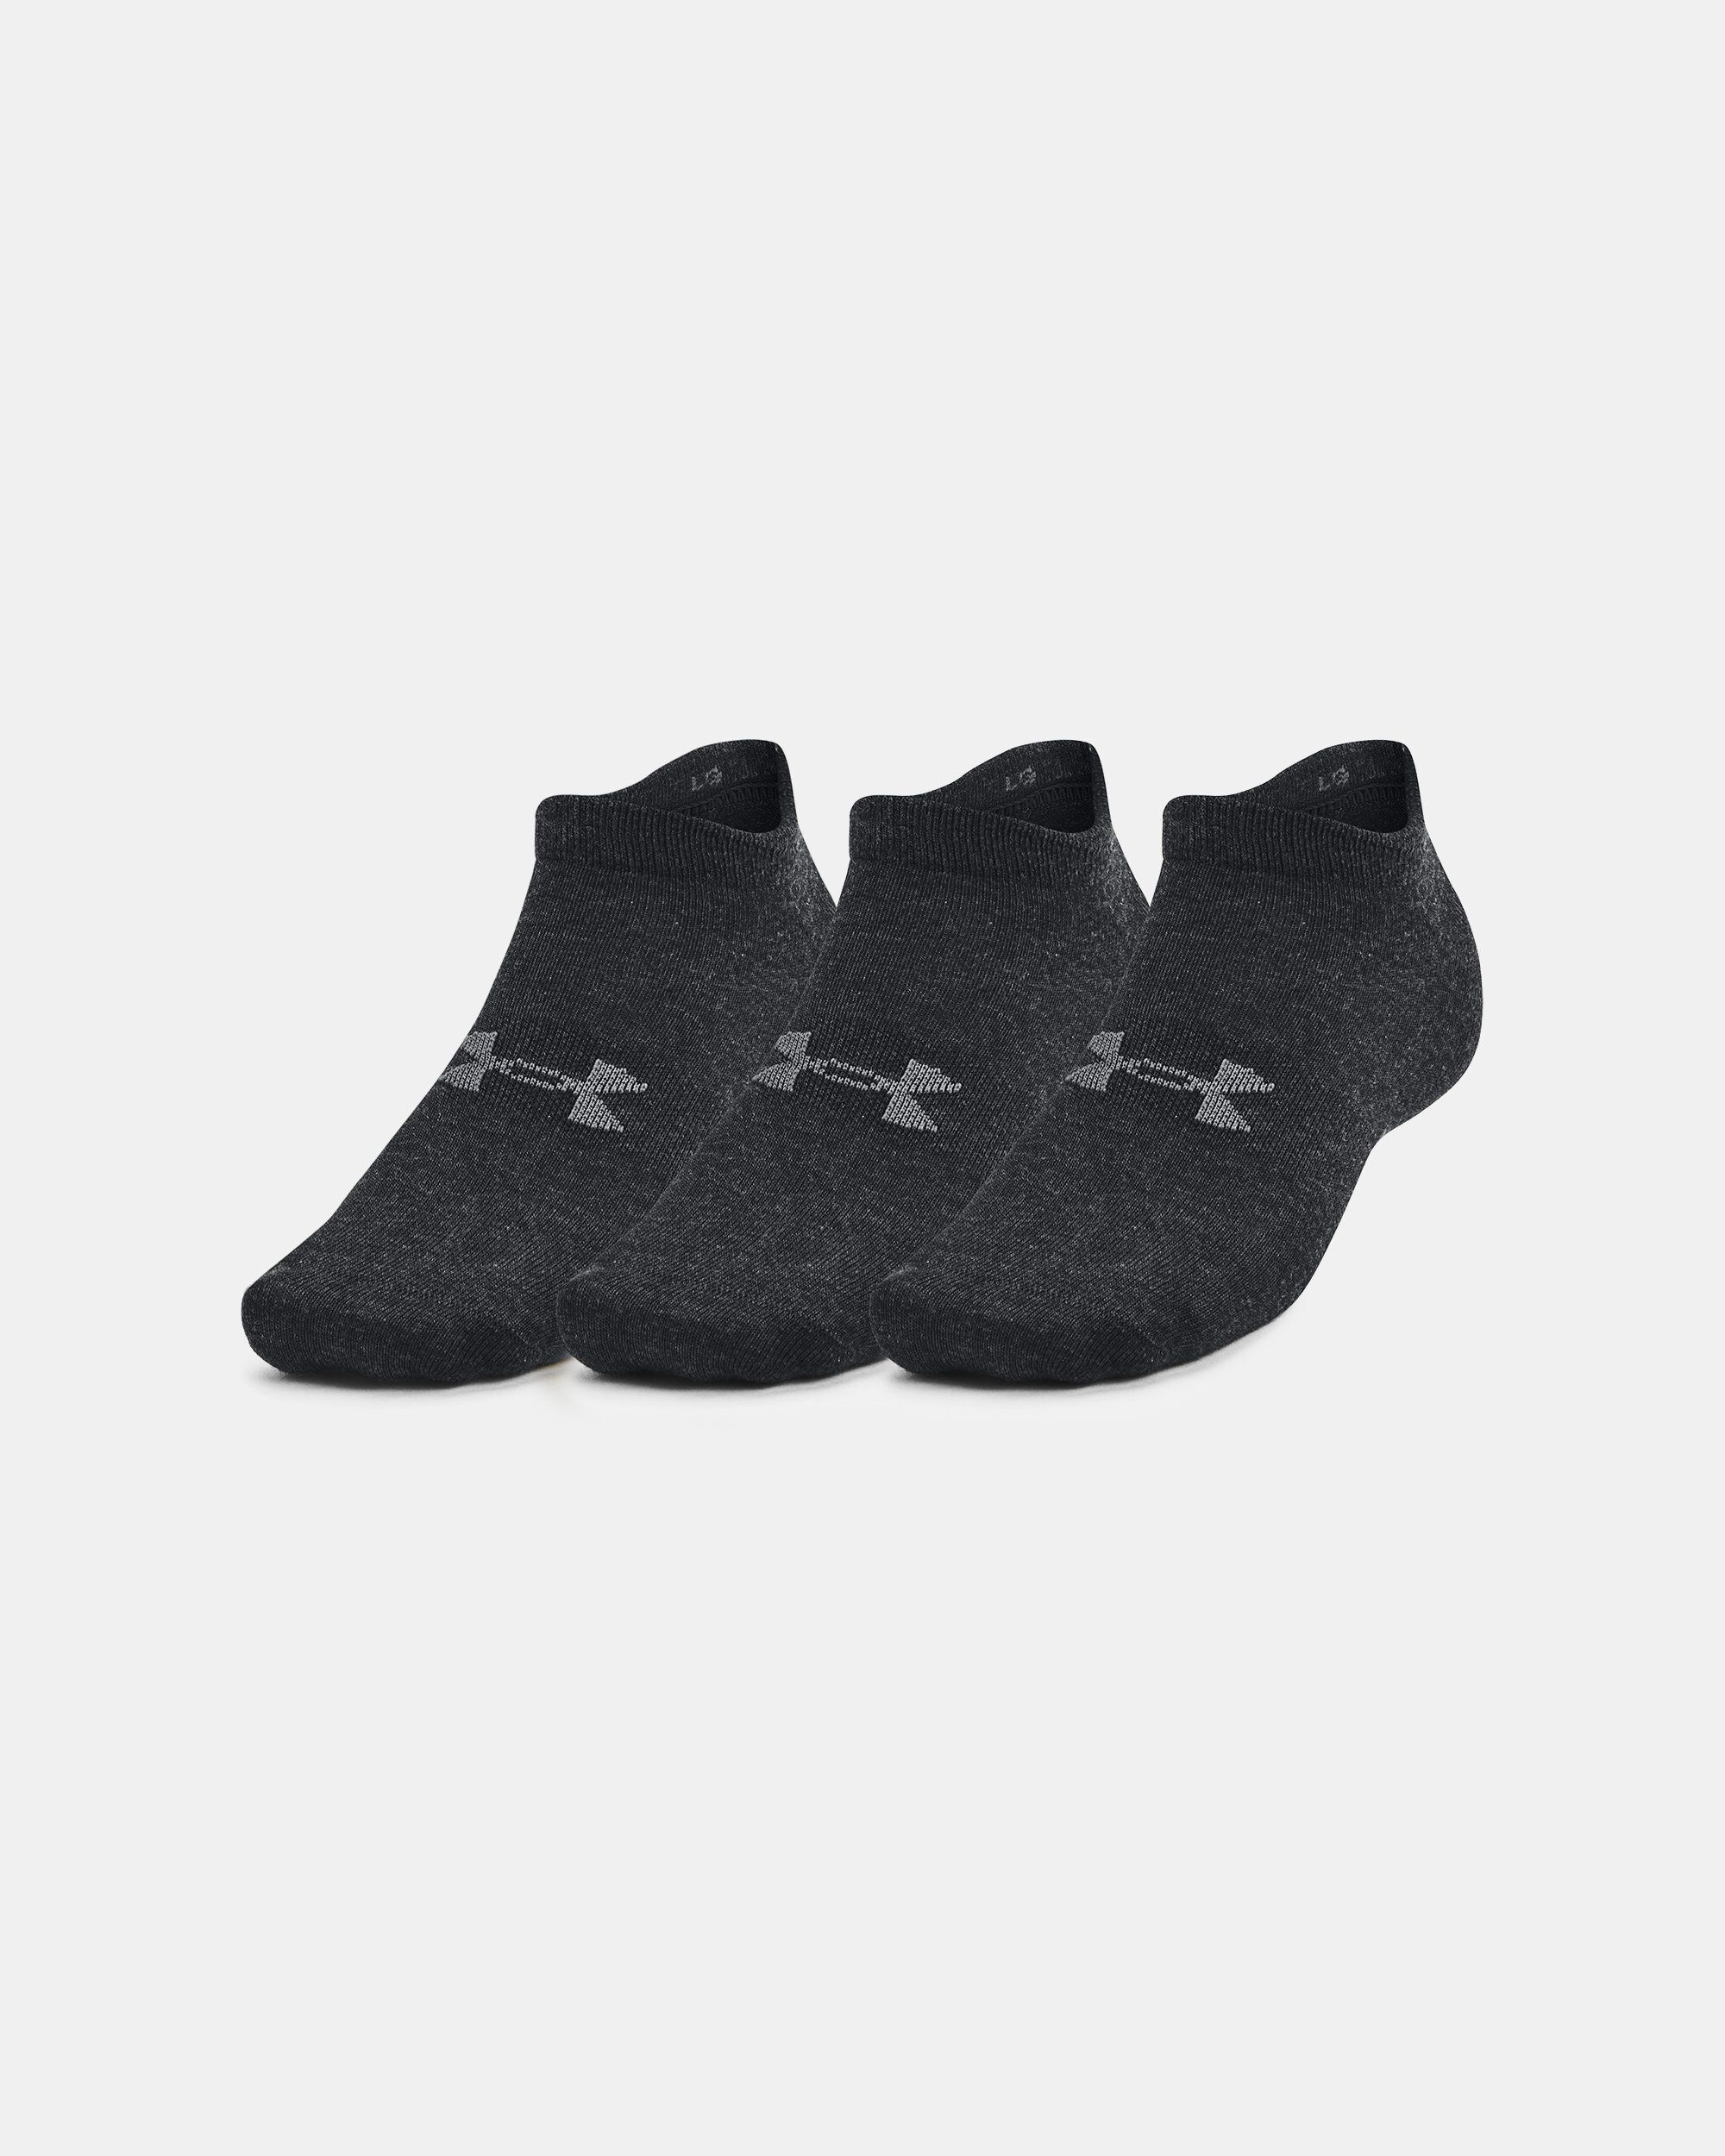 Men's Socks, Black, Sports, Ankle Socks in Dubai, UAE | Under Armour